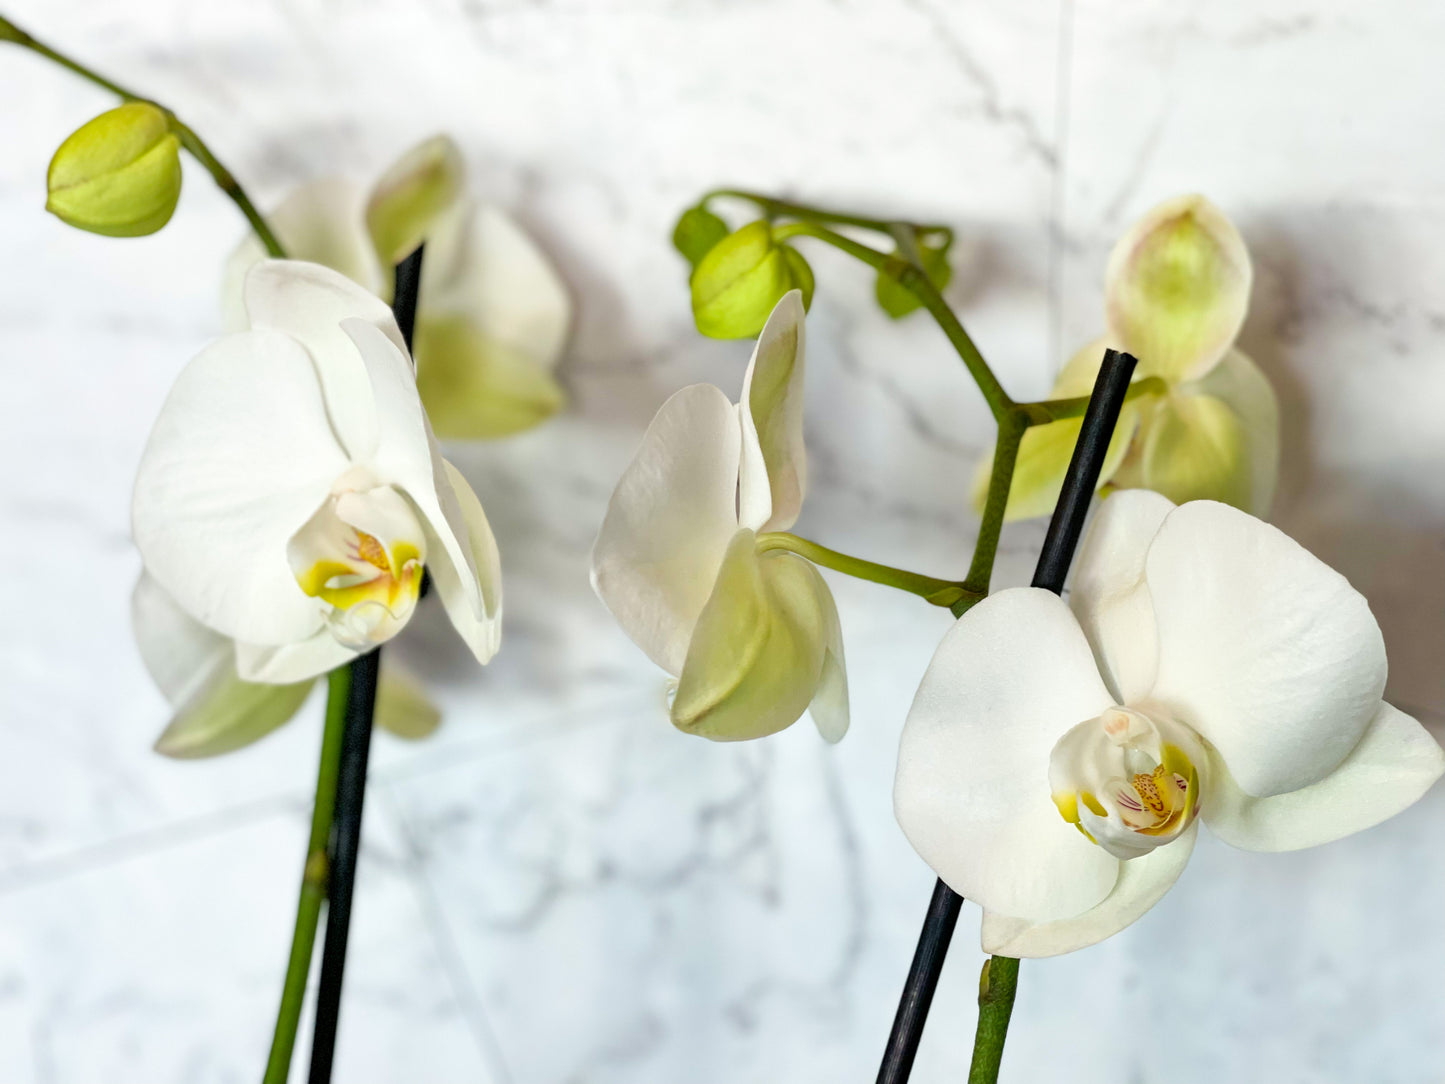 Double White Orchid Plant